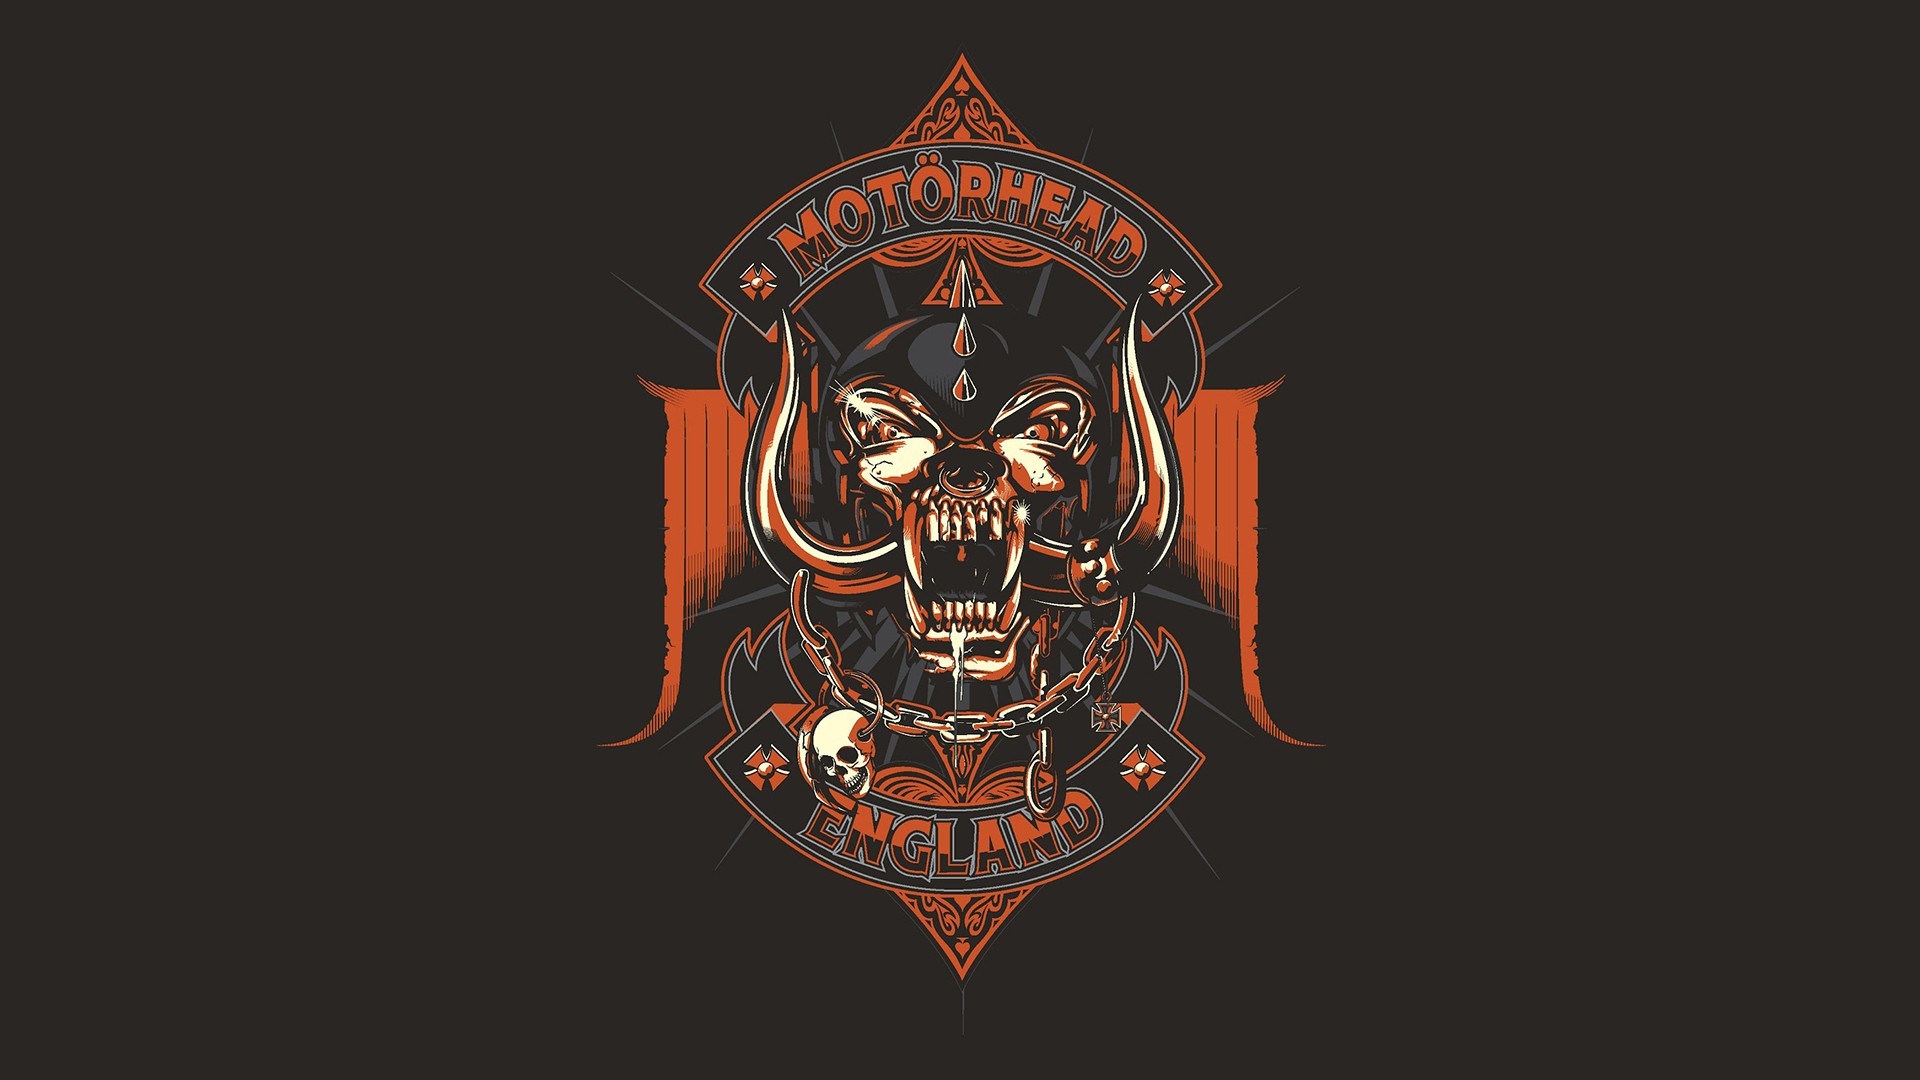 Motorhead england logo hd wallpaper background – HD Wallpapers